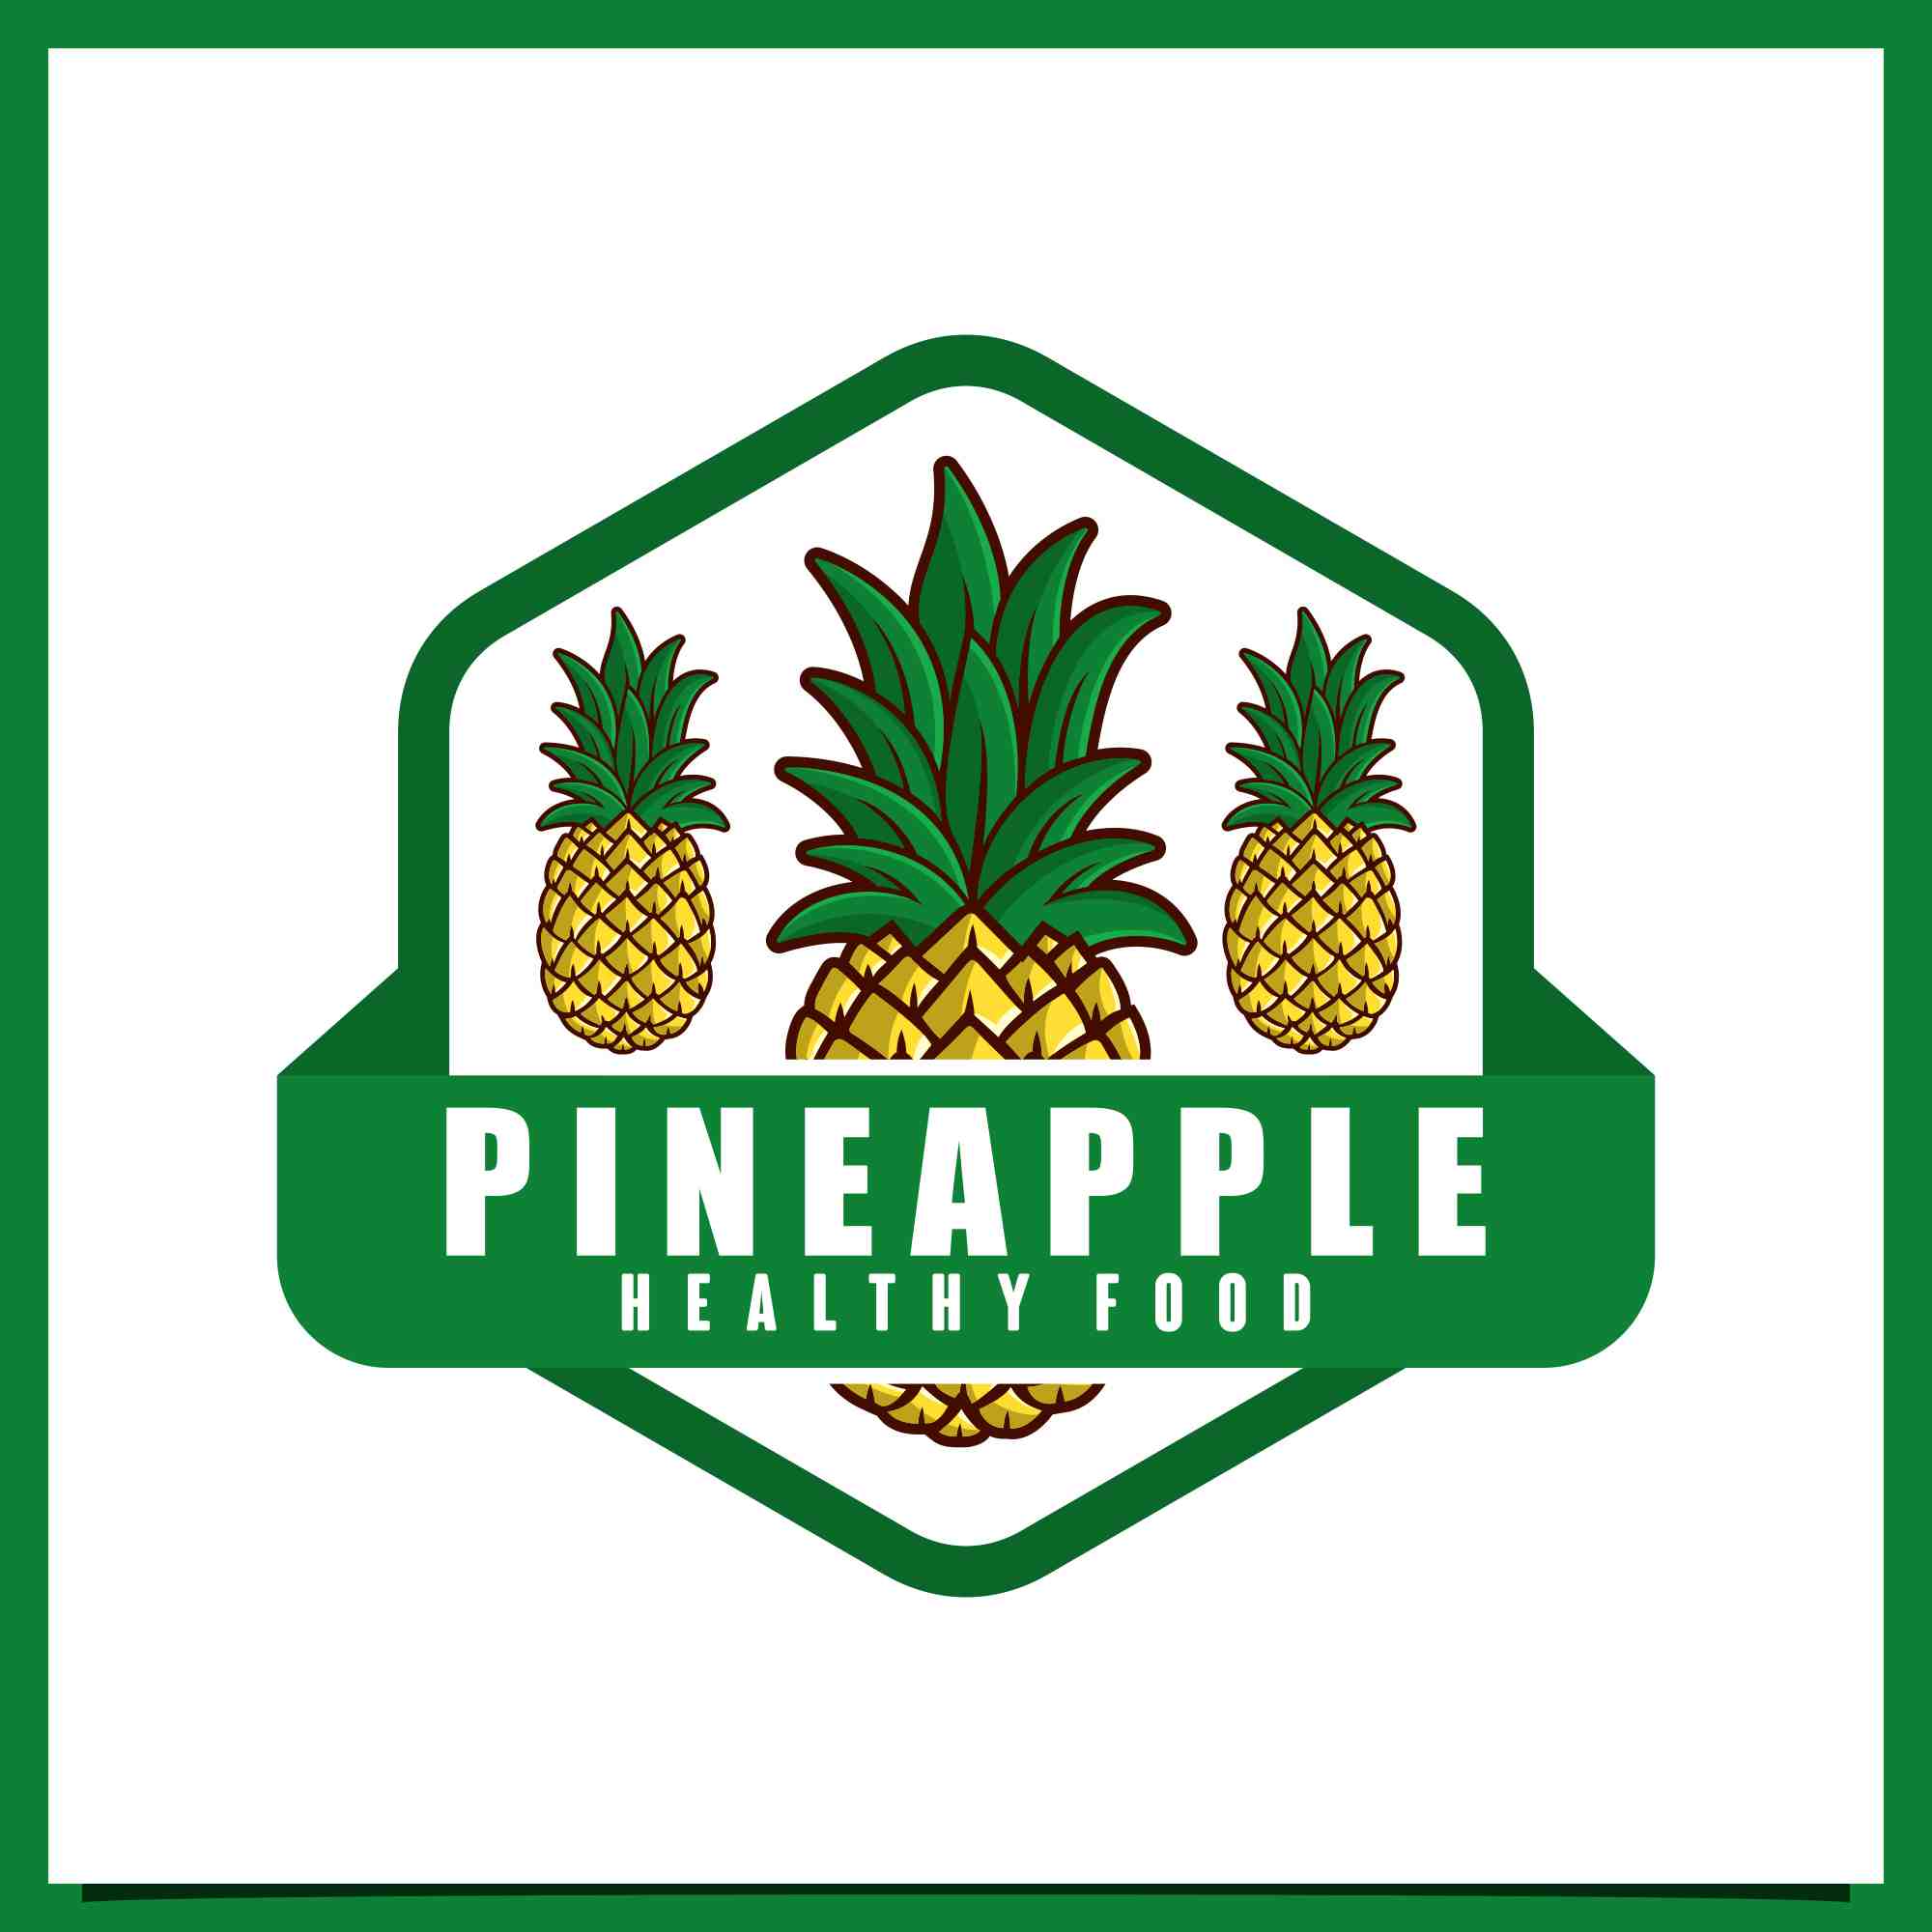 pineapple badge logo design collection 4 29